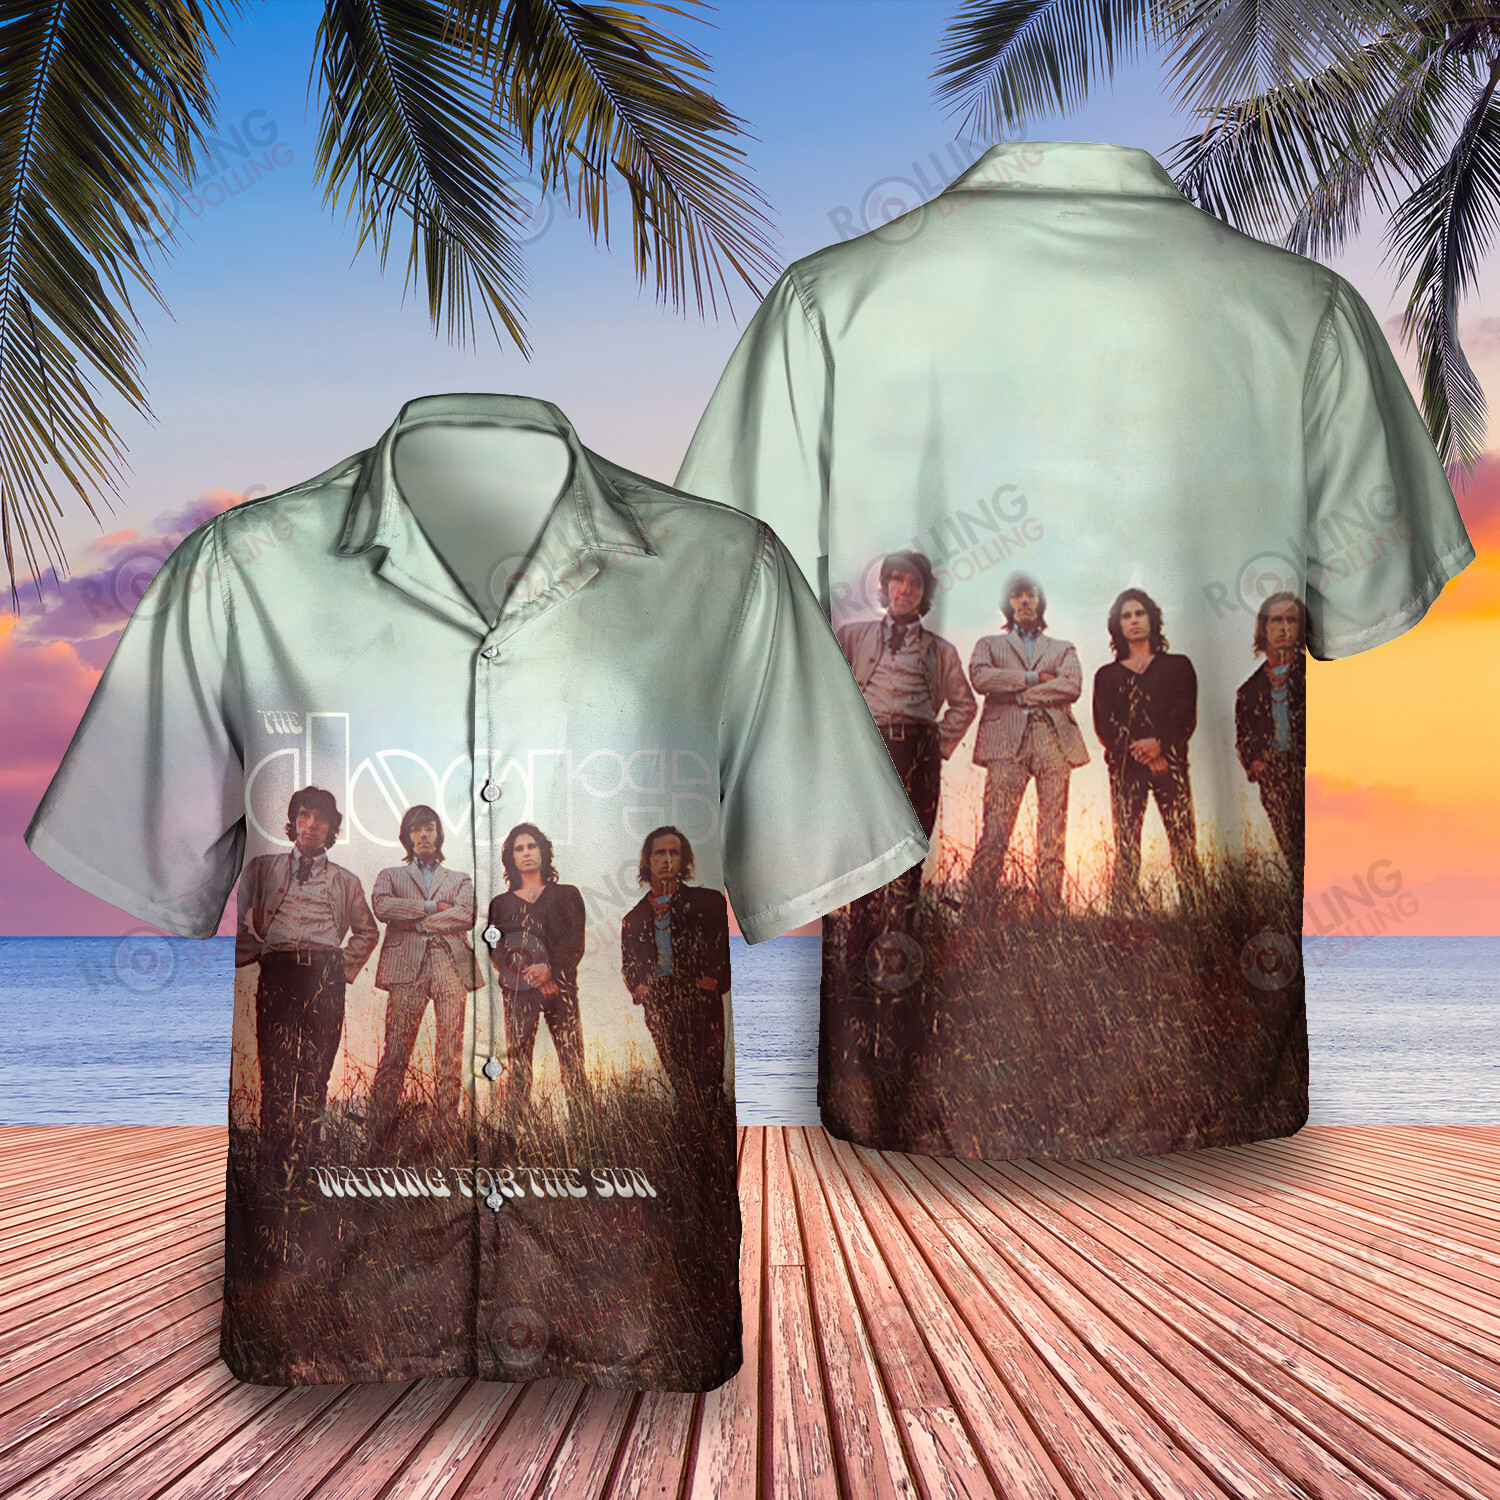 HOT The Doors Waiting For the Sun 2 Album Tropical Shirt1